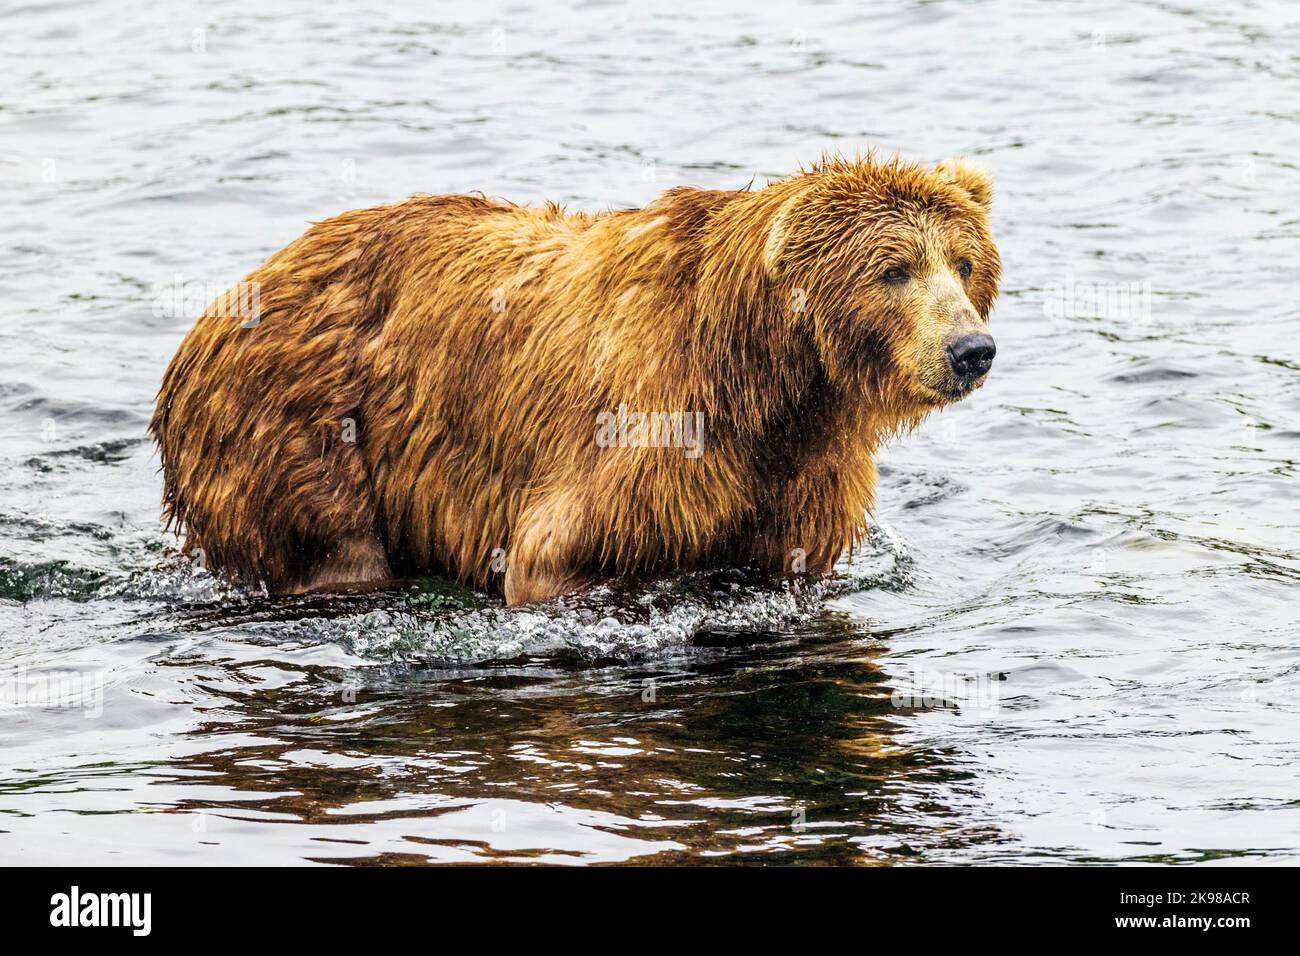 Orso bruno adulto; Ursus arctos middendorffi; pesca per la riproduzione di salmone sockeye; Grizzly Bear; Kodiak Island National Wildlife Refuge; Alaska; USA Foto Stock